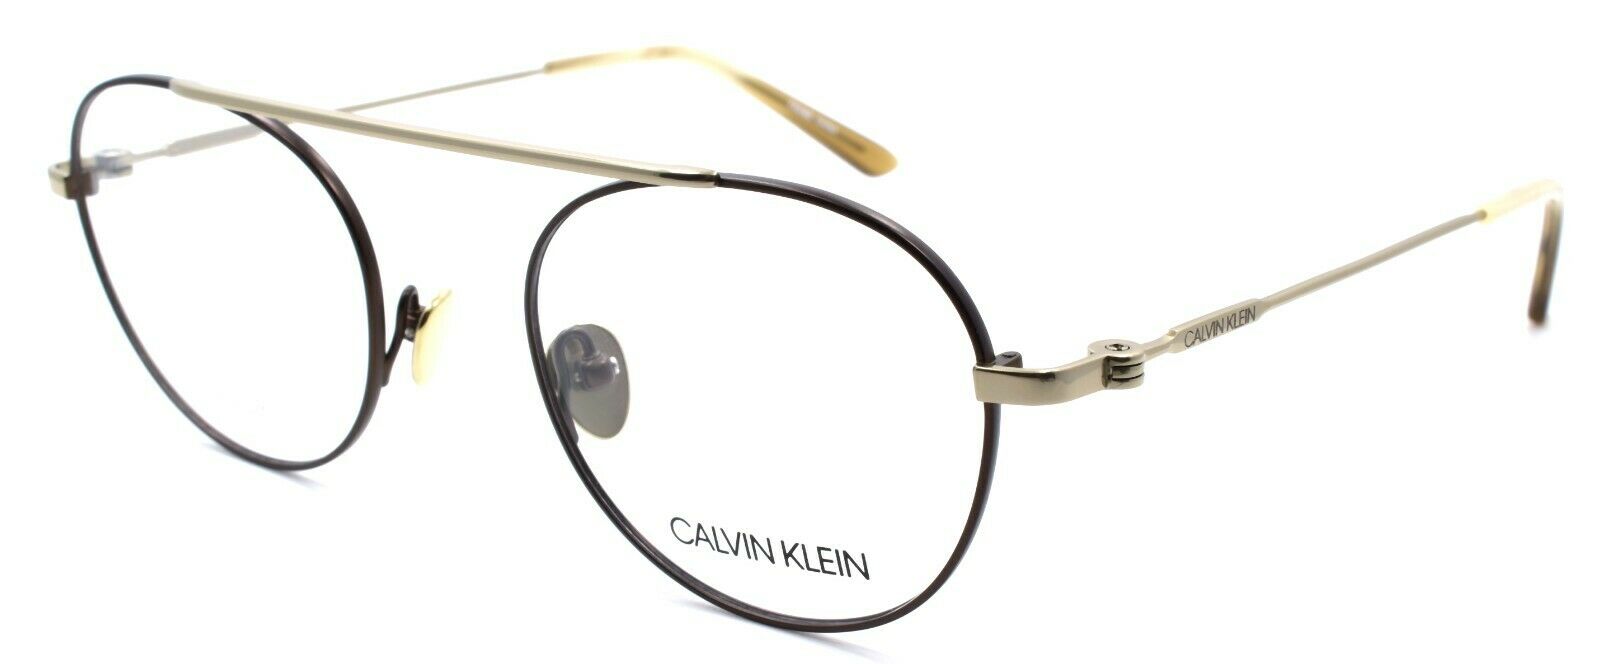 1-Calvin Klein C19151 050 Men's Eyeglasses Frames Titanium 50-20-145 Grey-883901121704-IKSpecs